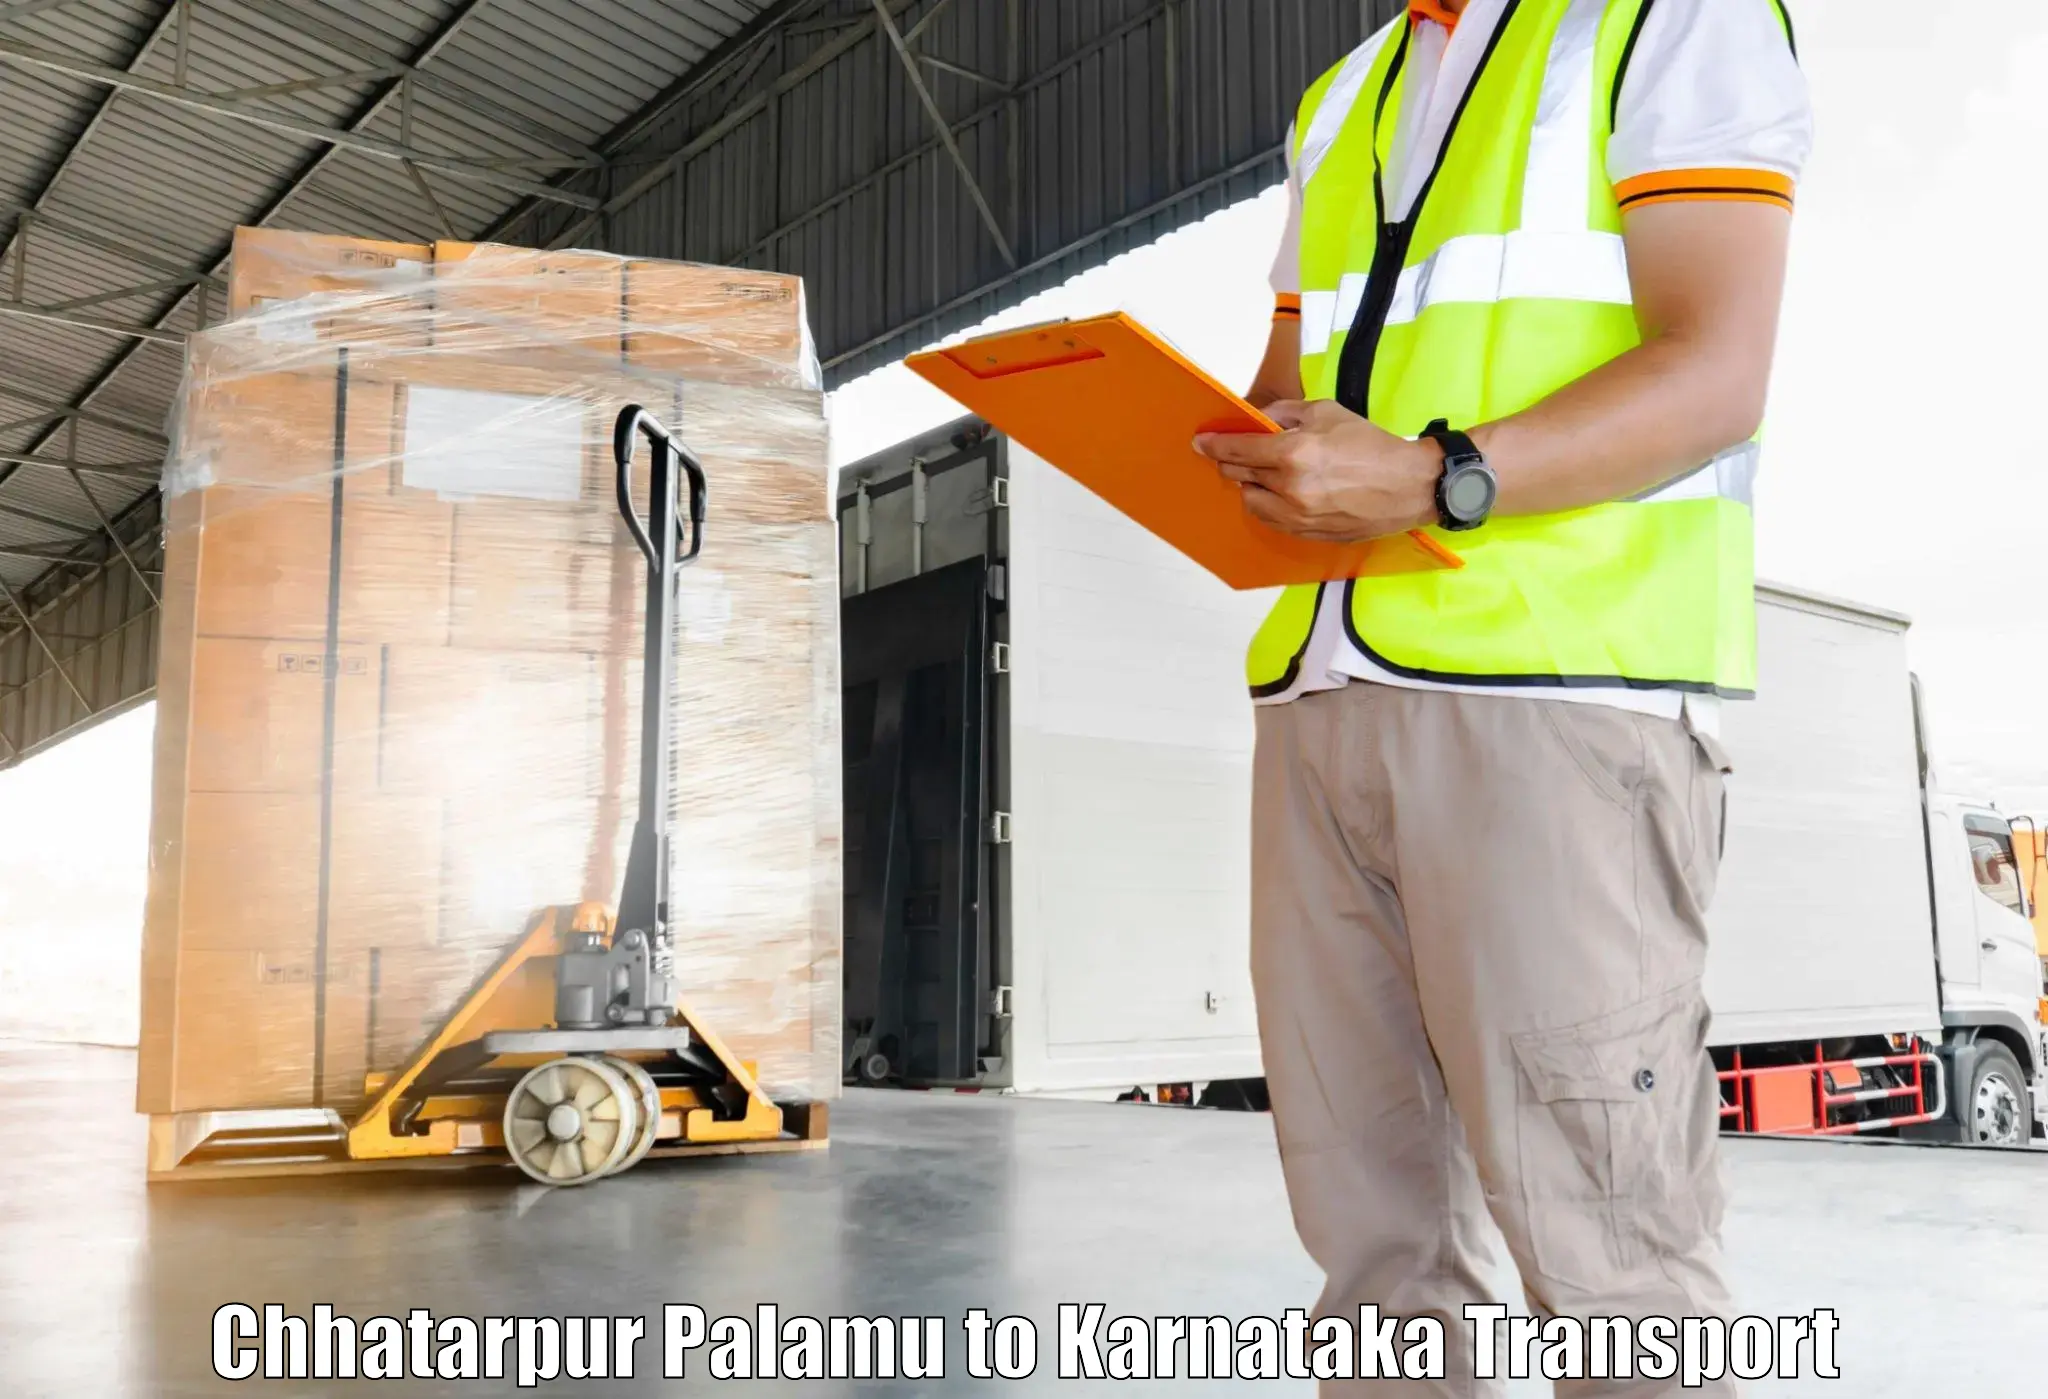 Container transport service Chhatarpur Palamu to Hunsur